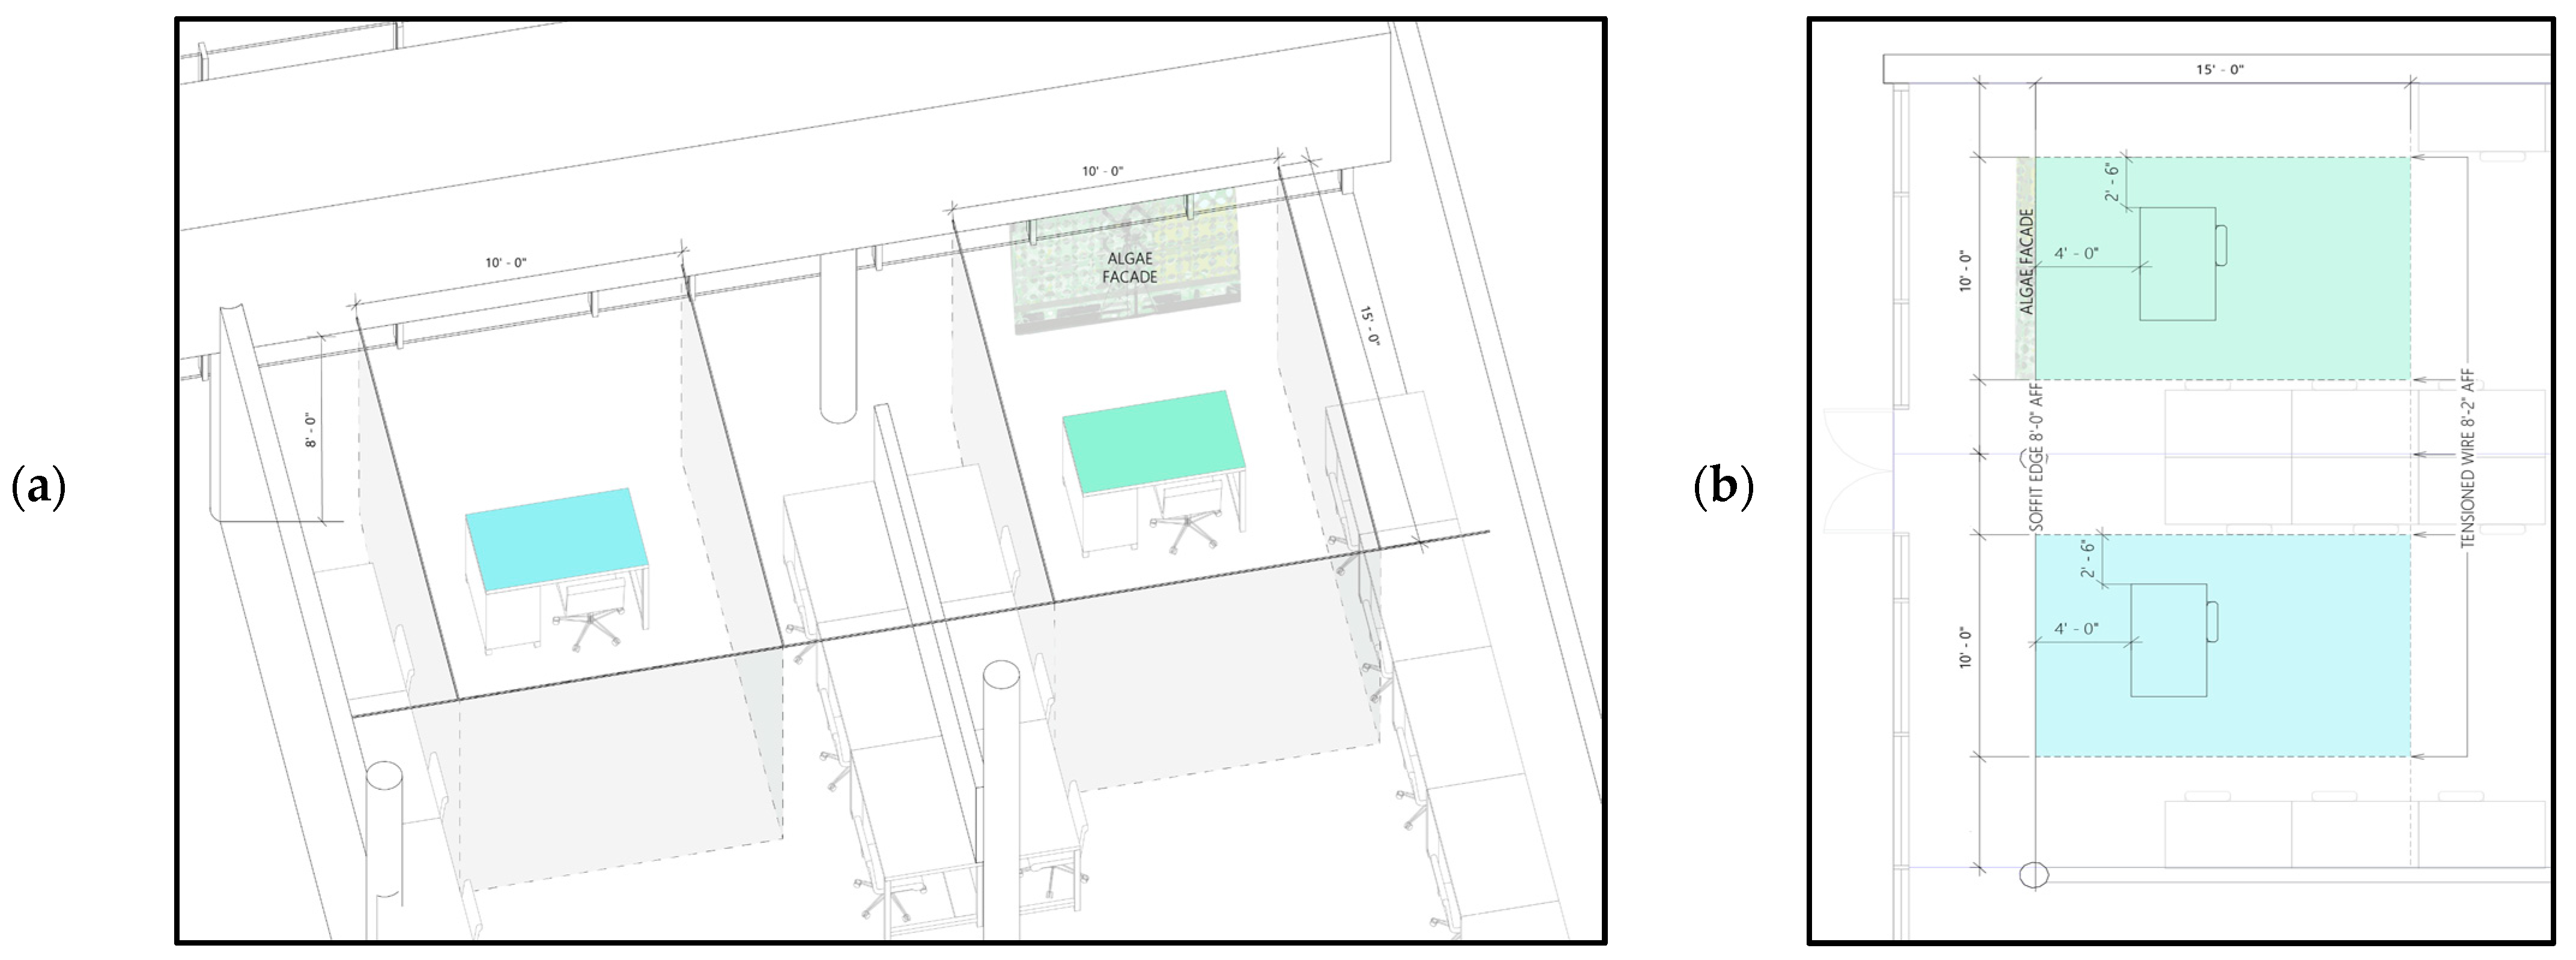 Floor plan of the enclosure design for experiment 2. Behaviour was